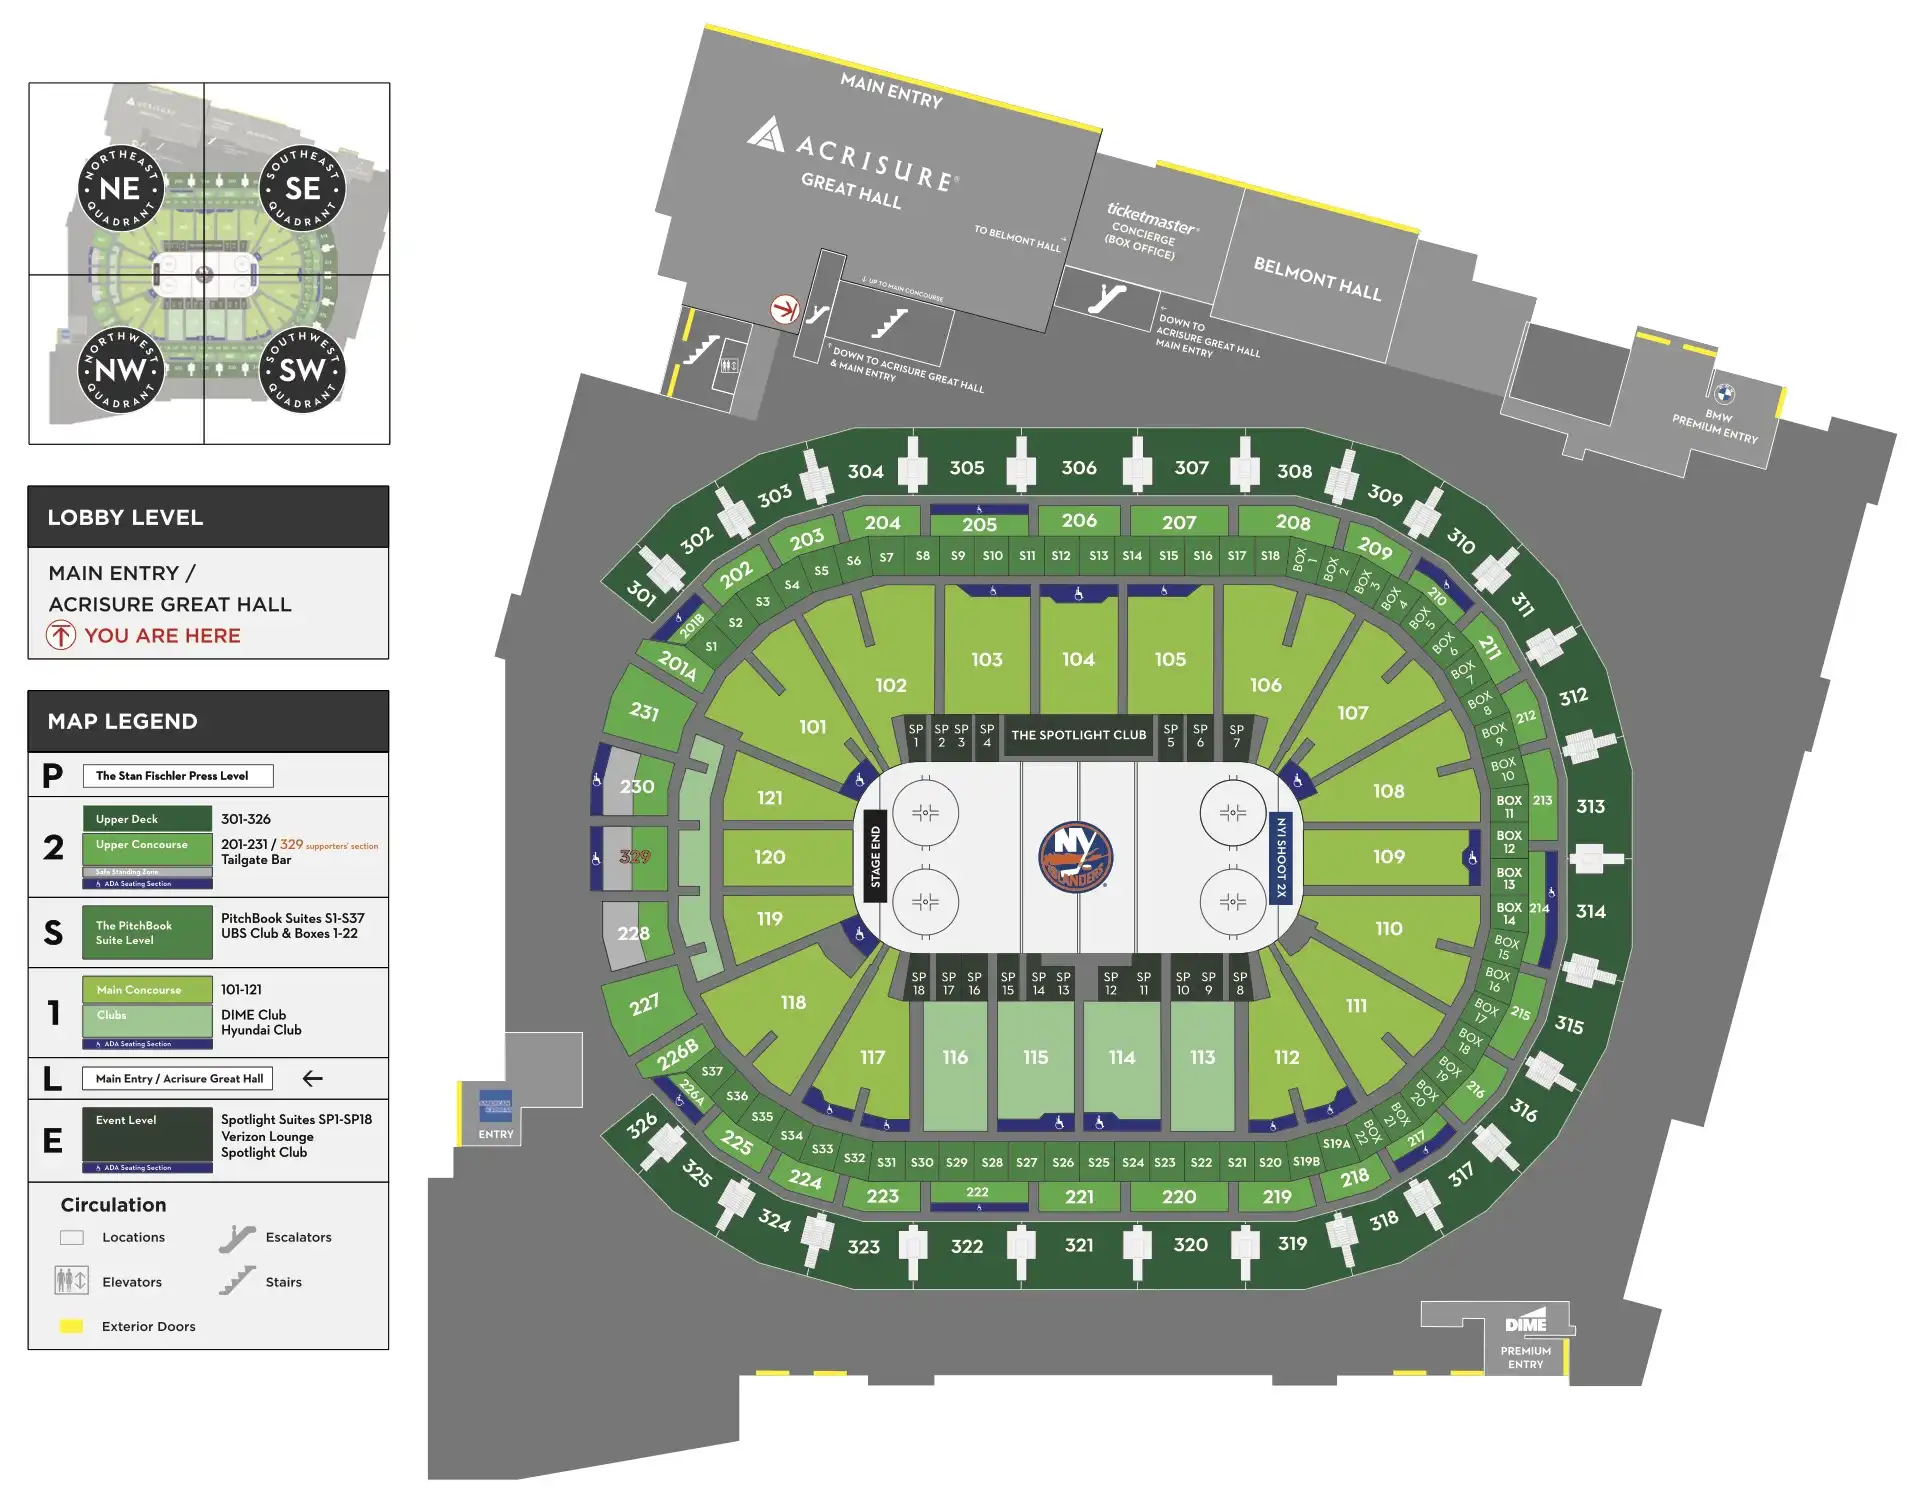 Venue Maps UBS Arena